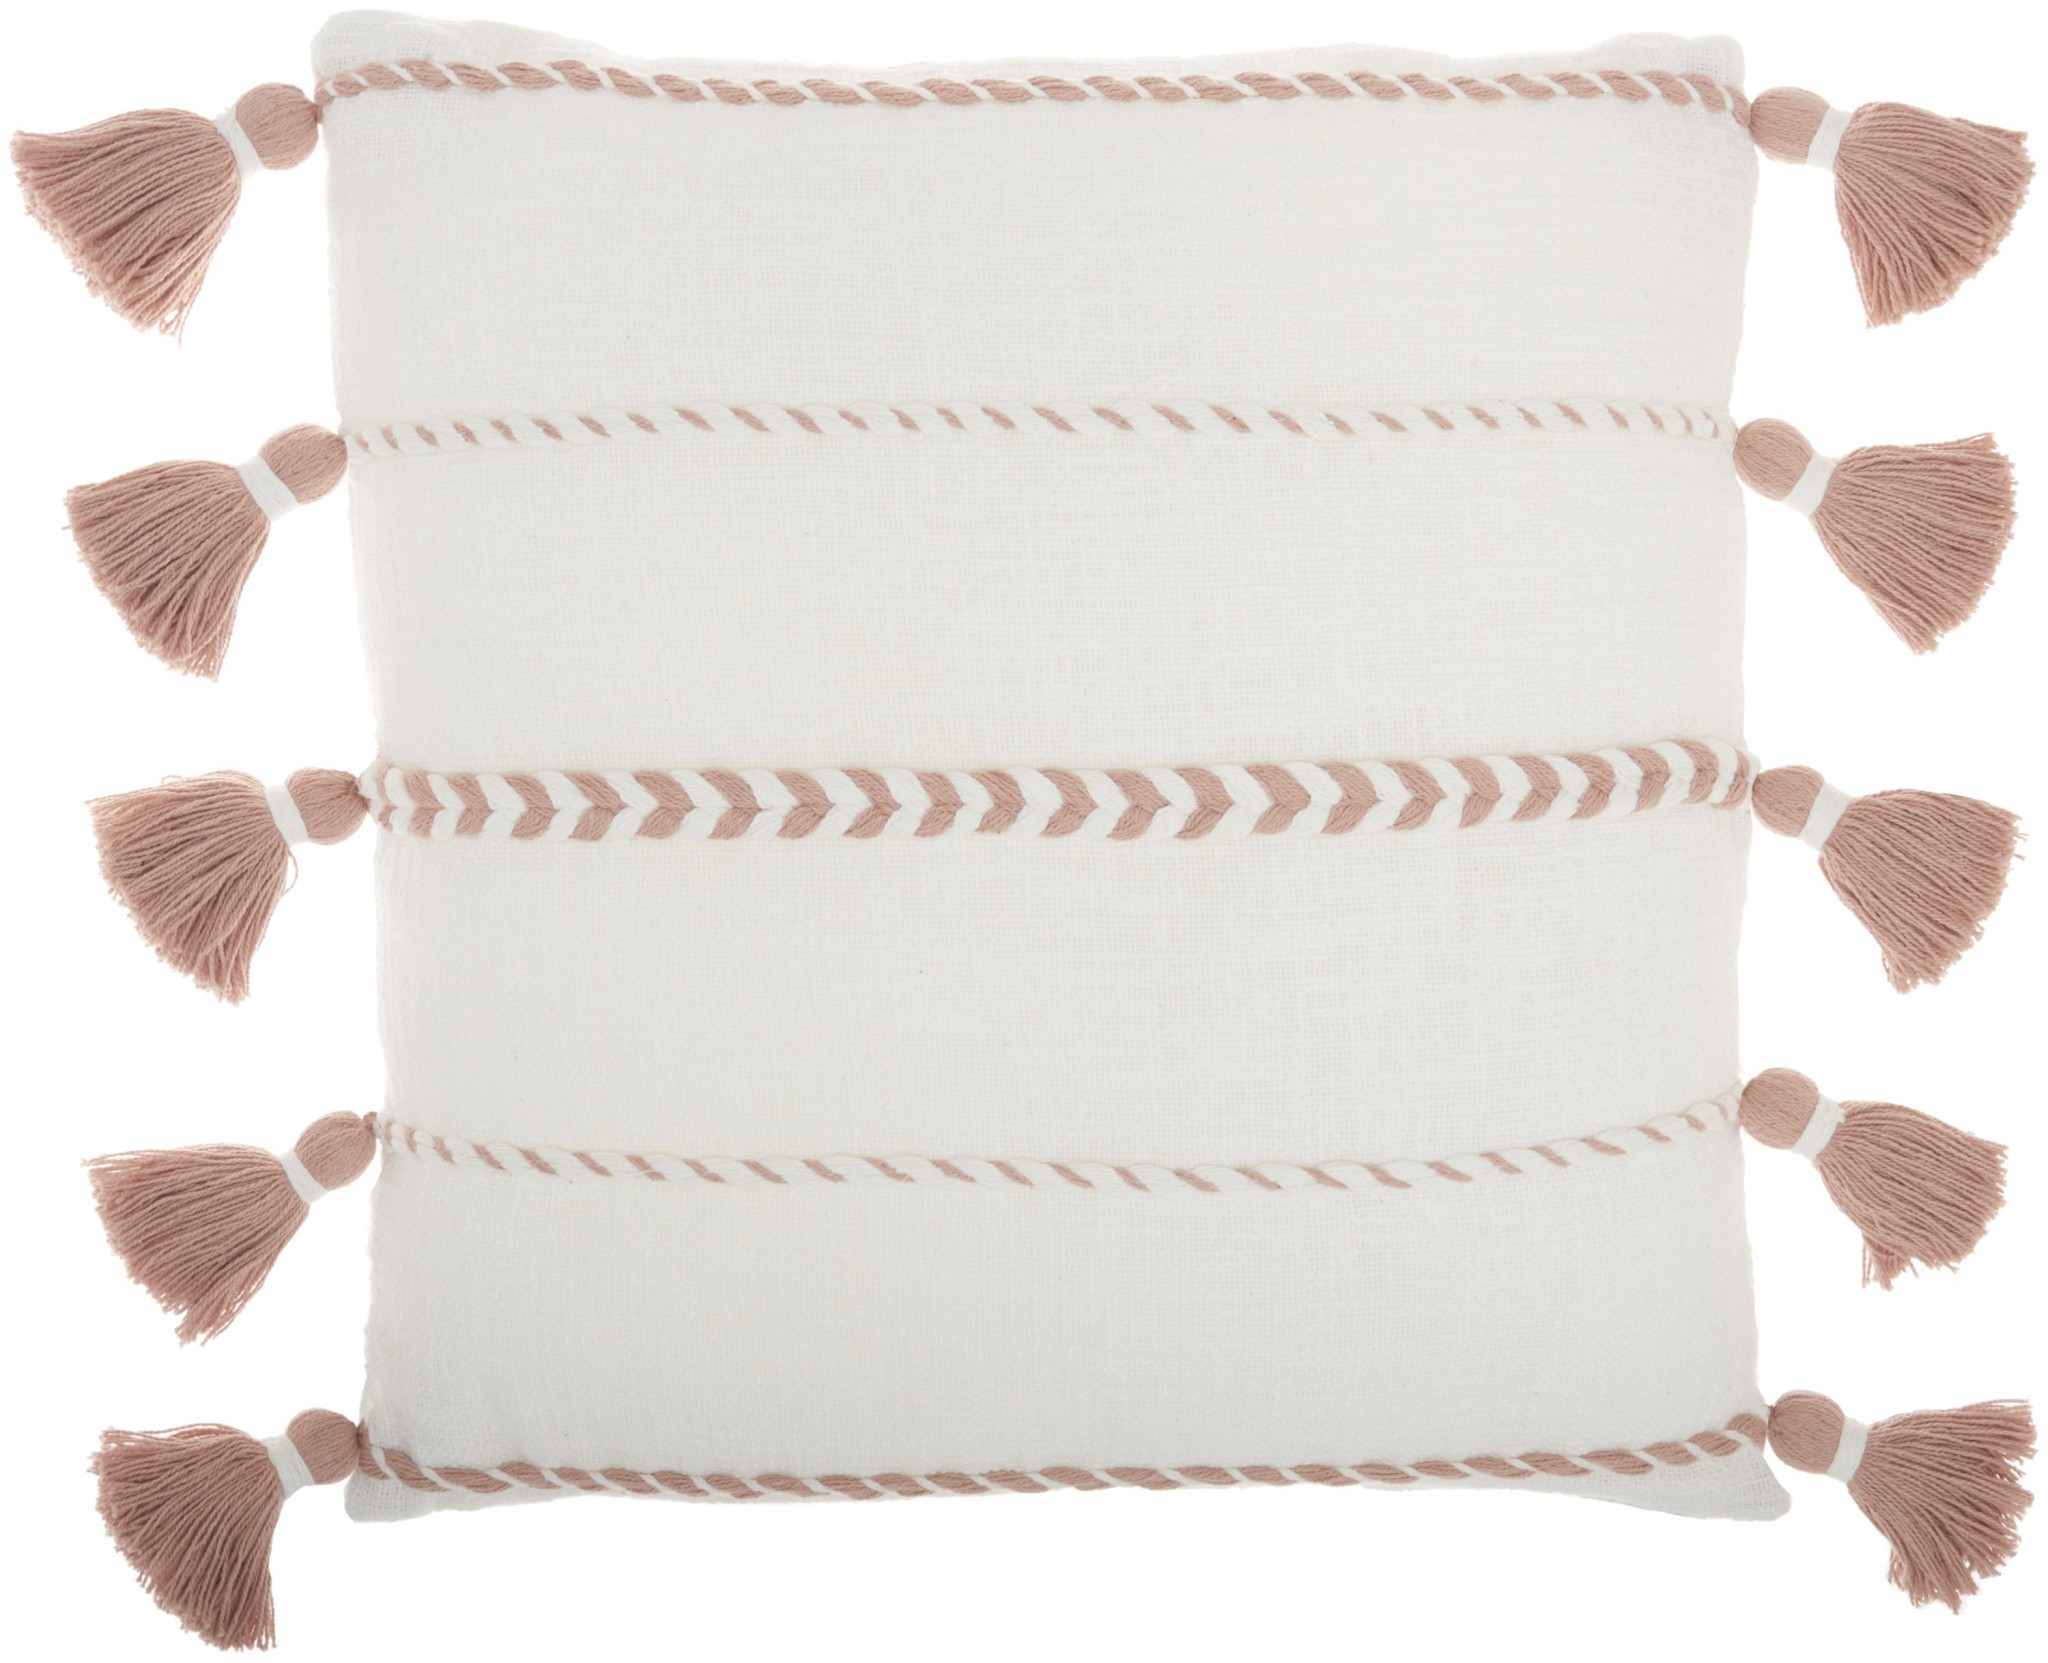 Bohemian White Cotton Accent Pillow with Blush Tassel Details